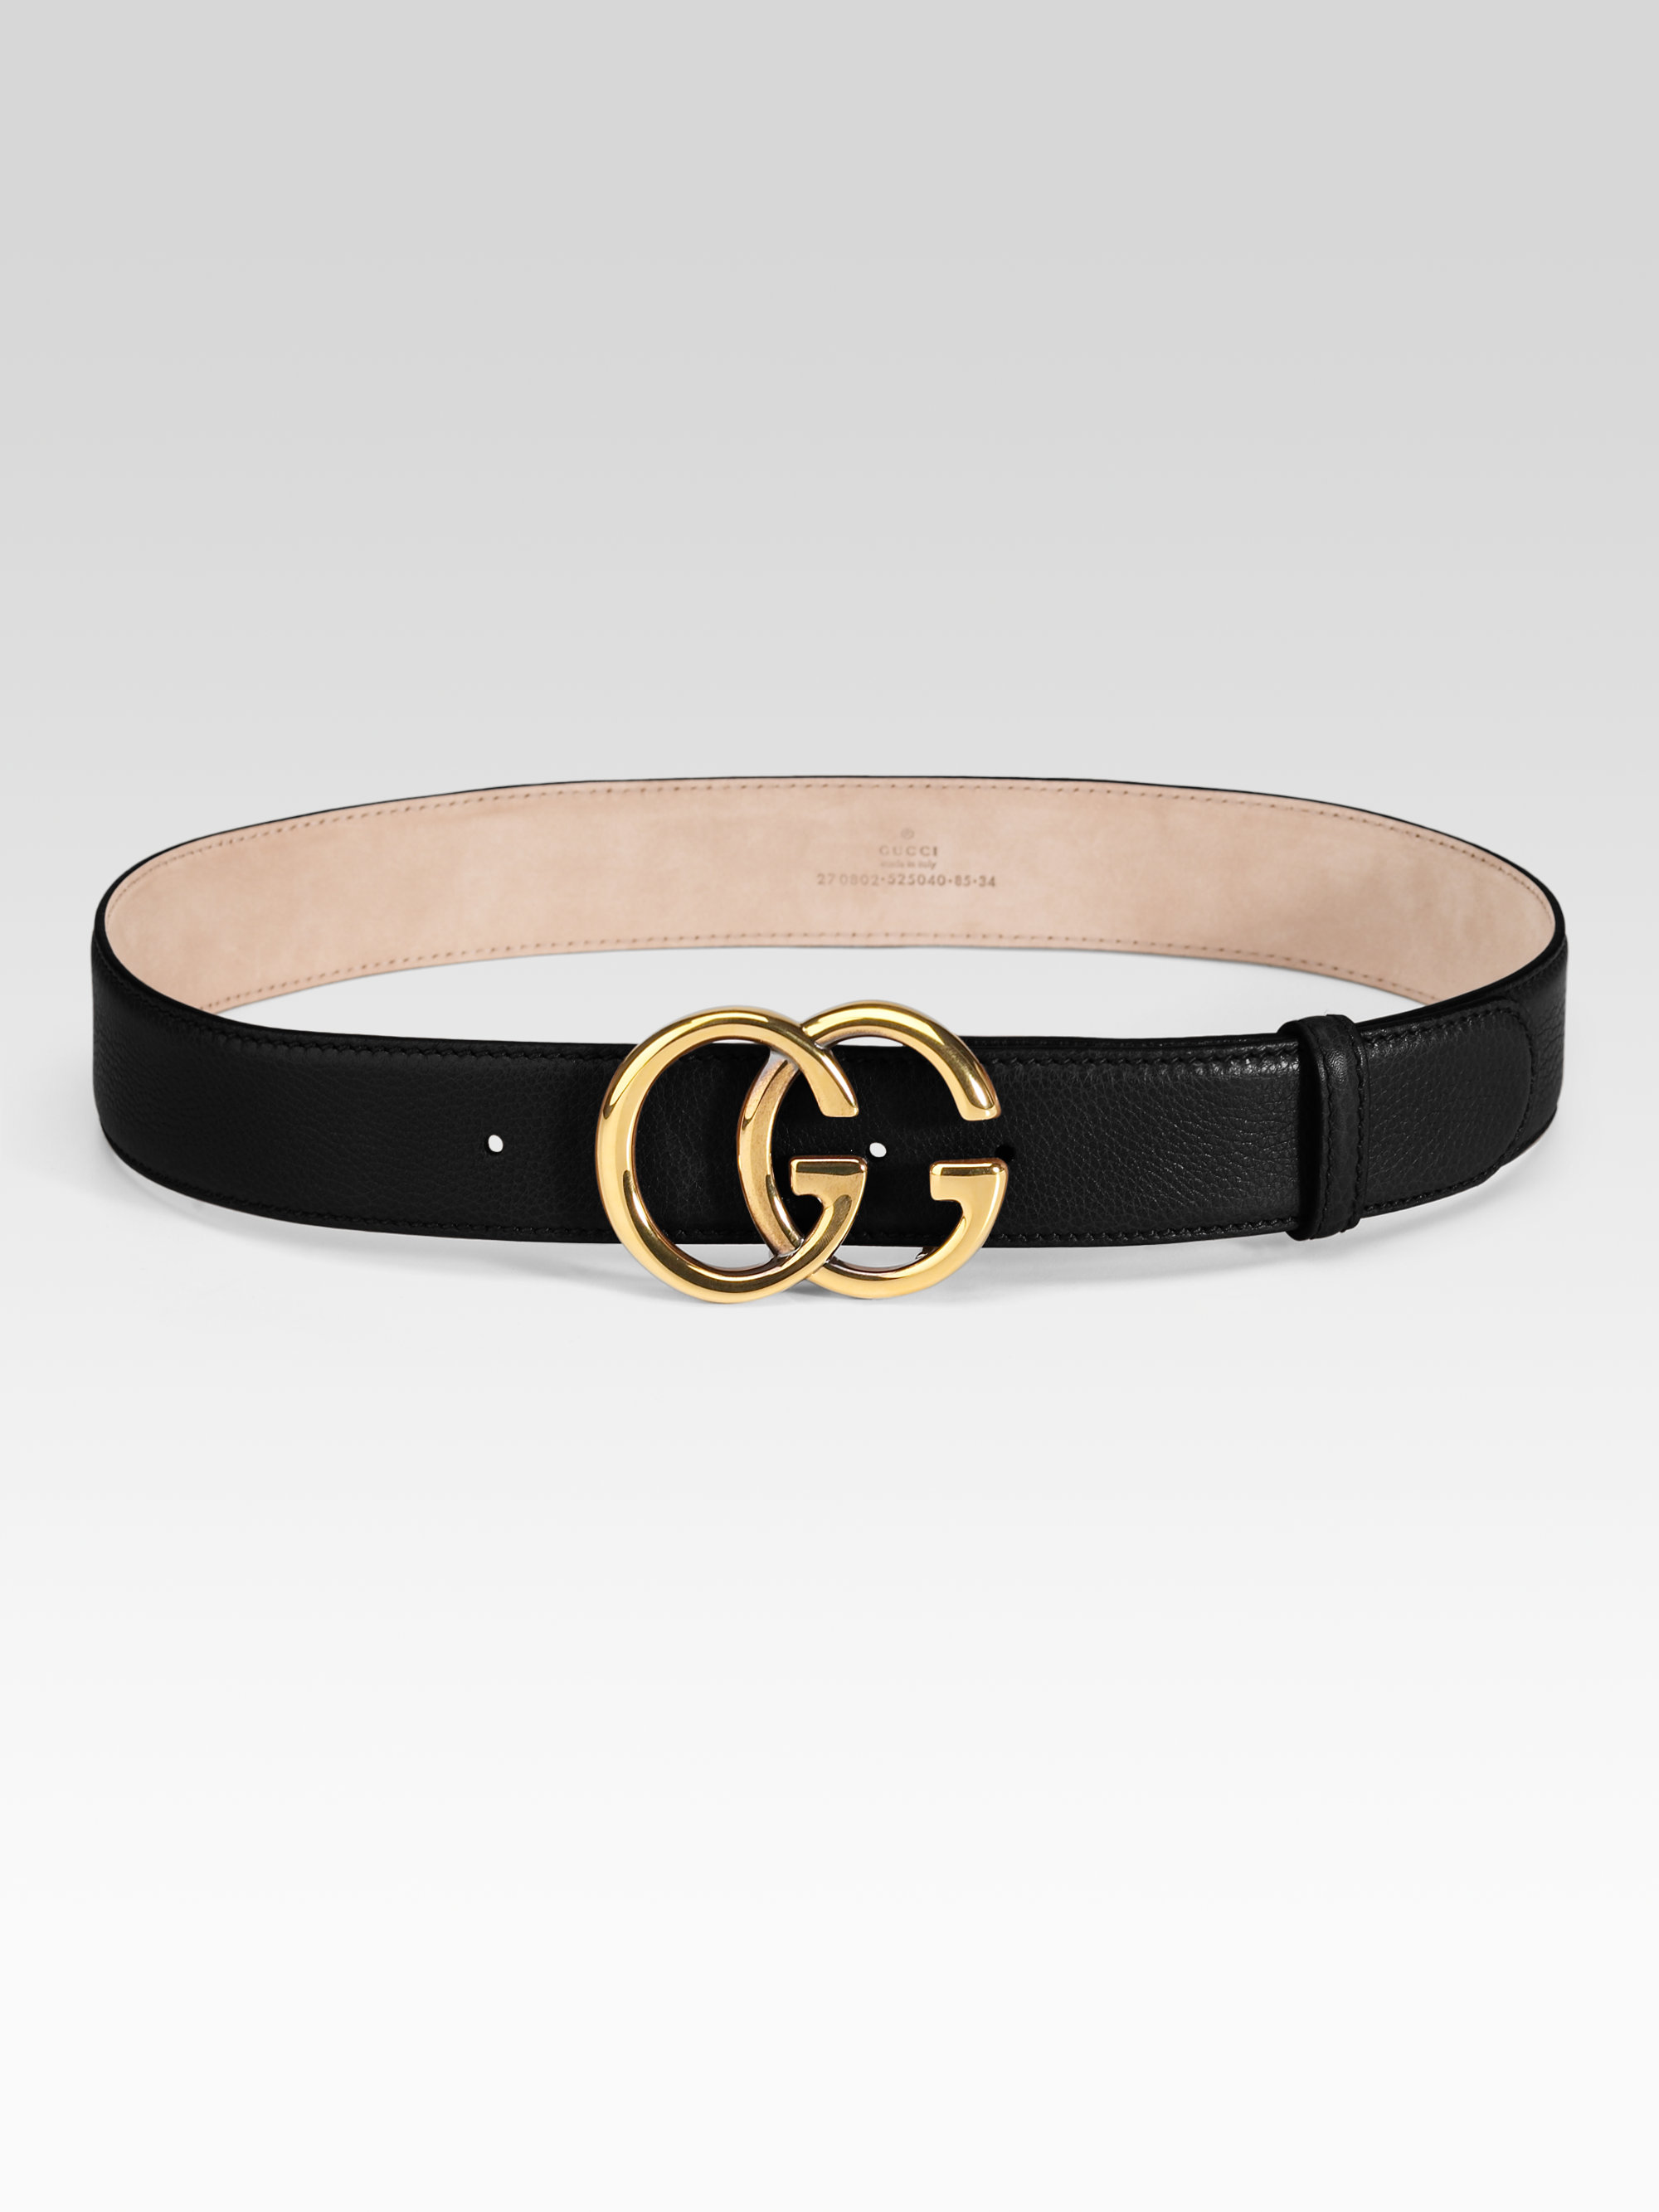 Gucci Double G Buckle Belt in Black for Men - Lyst